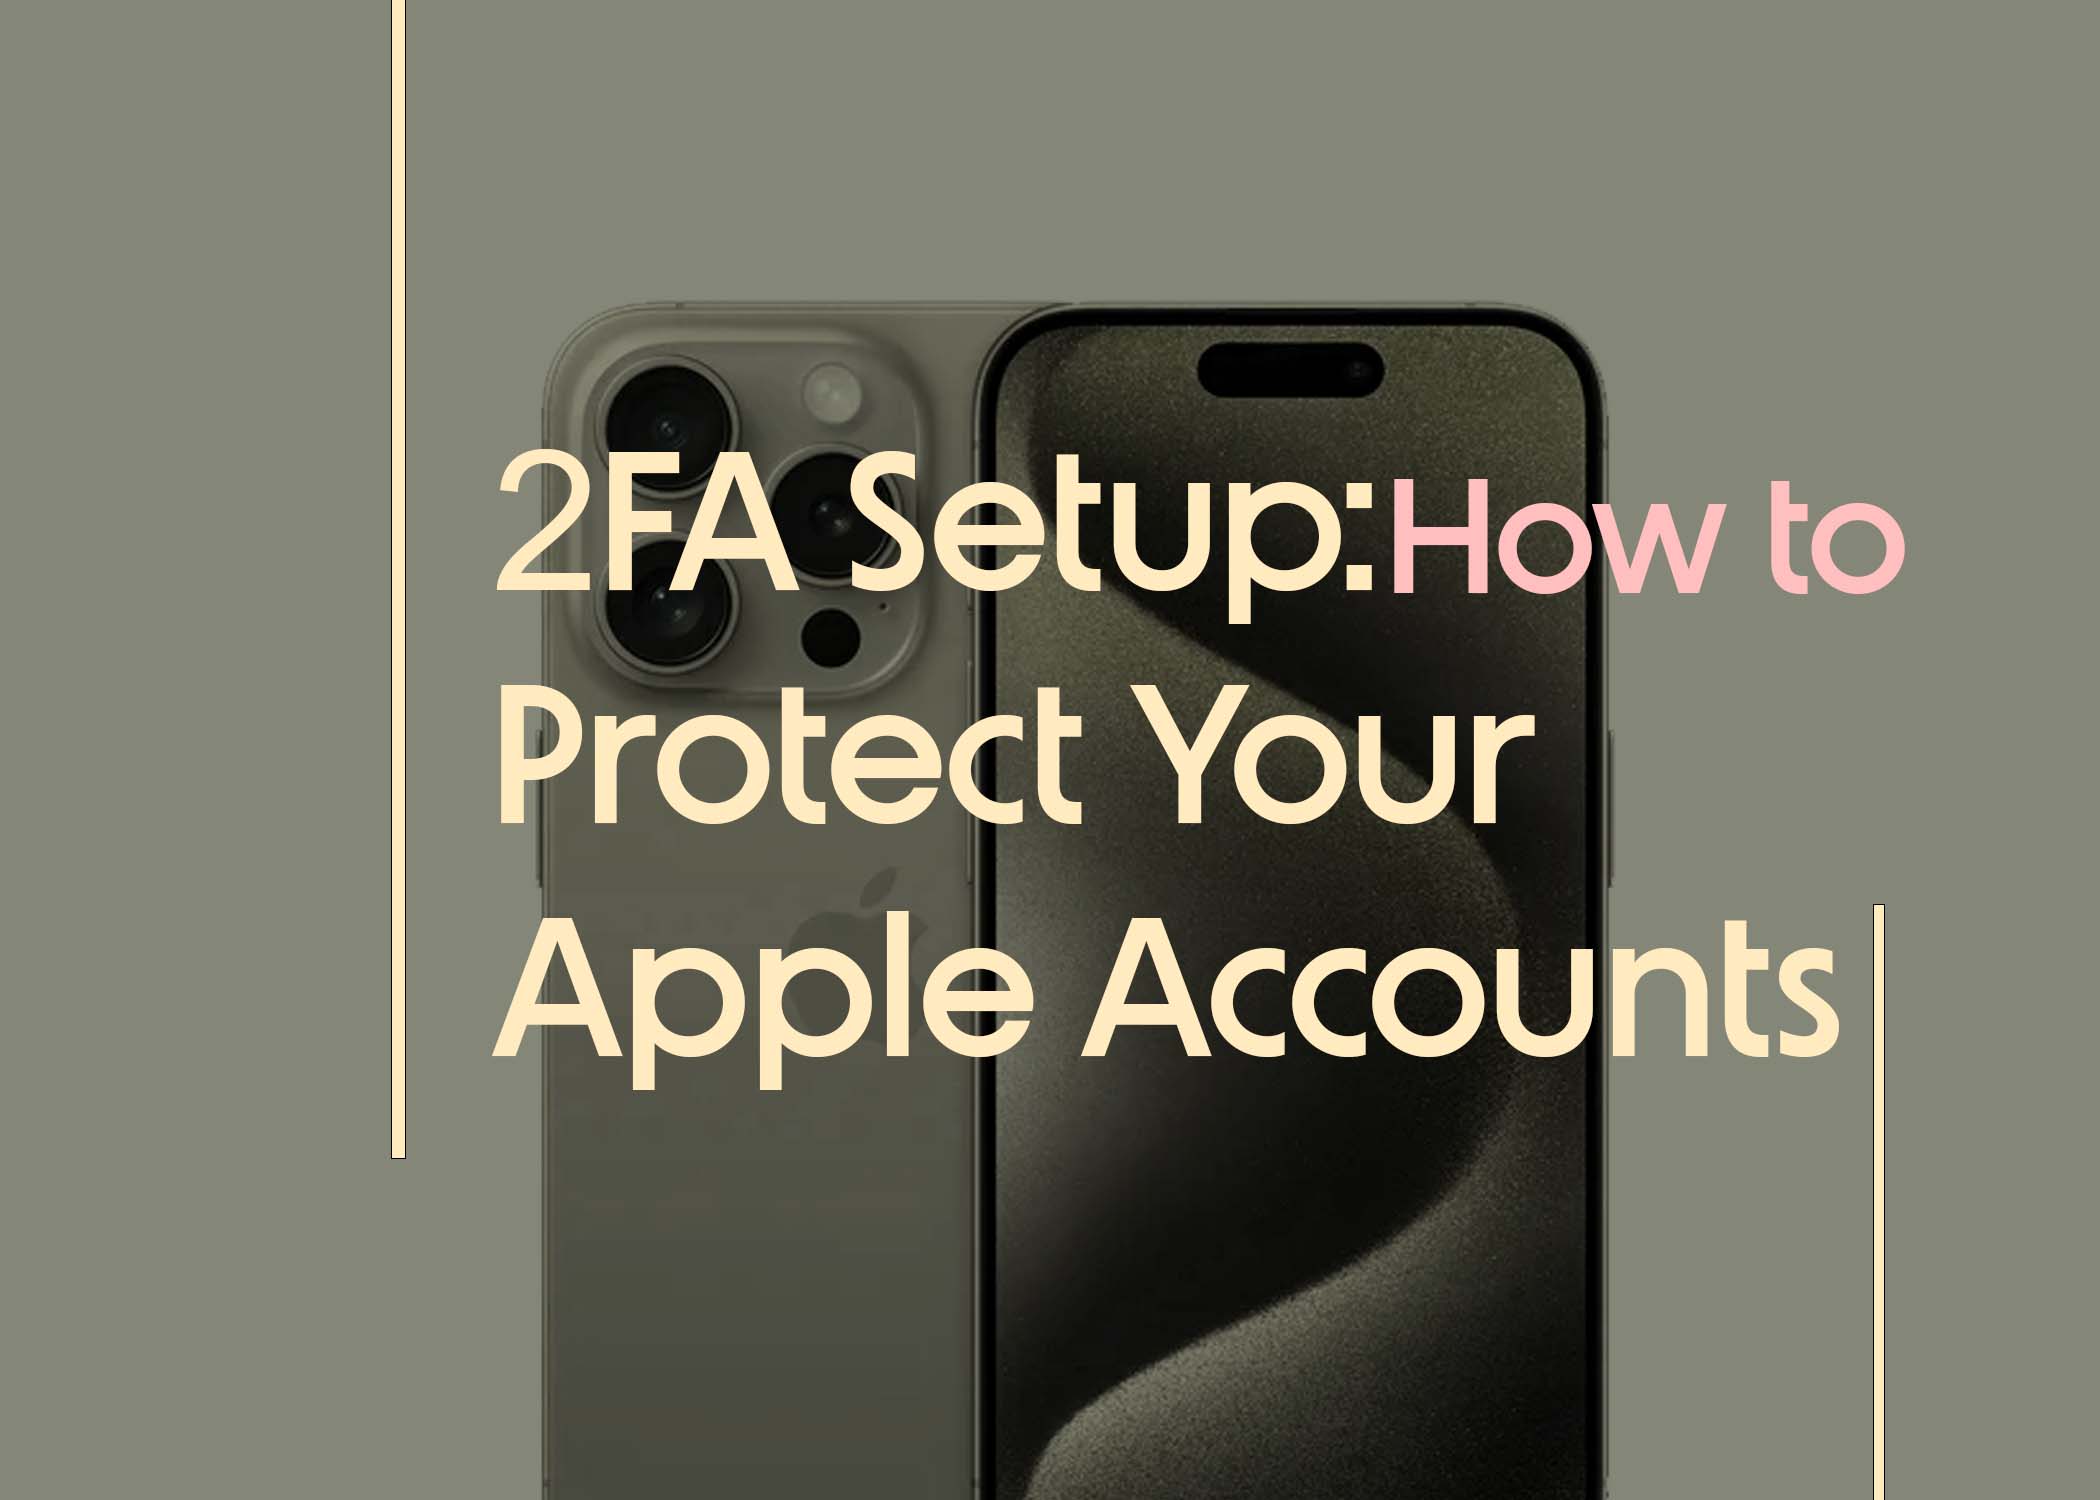 2FA Setup, how to Protect Your Apple Accounts